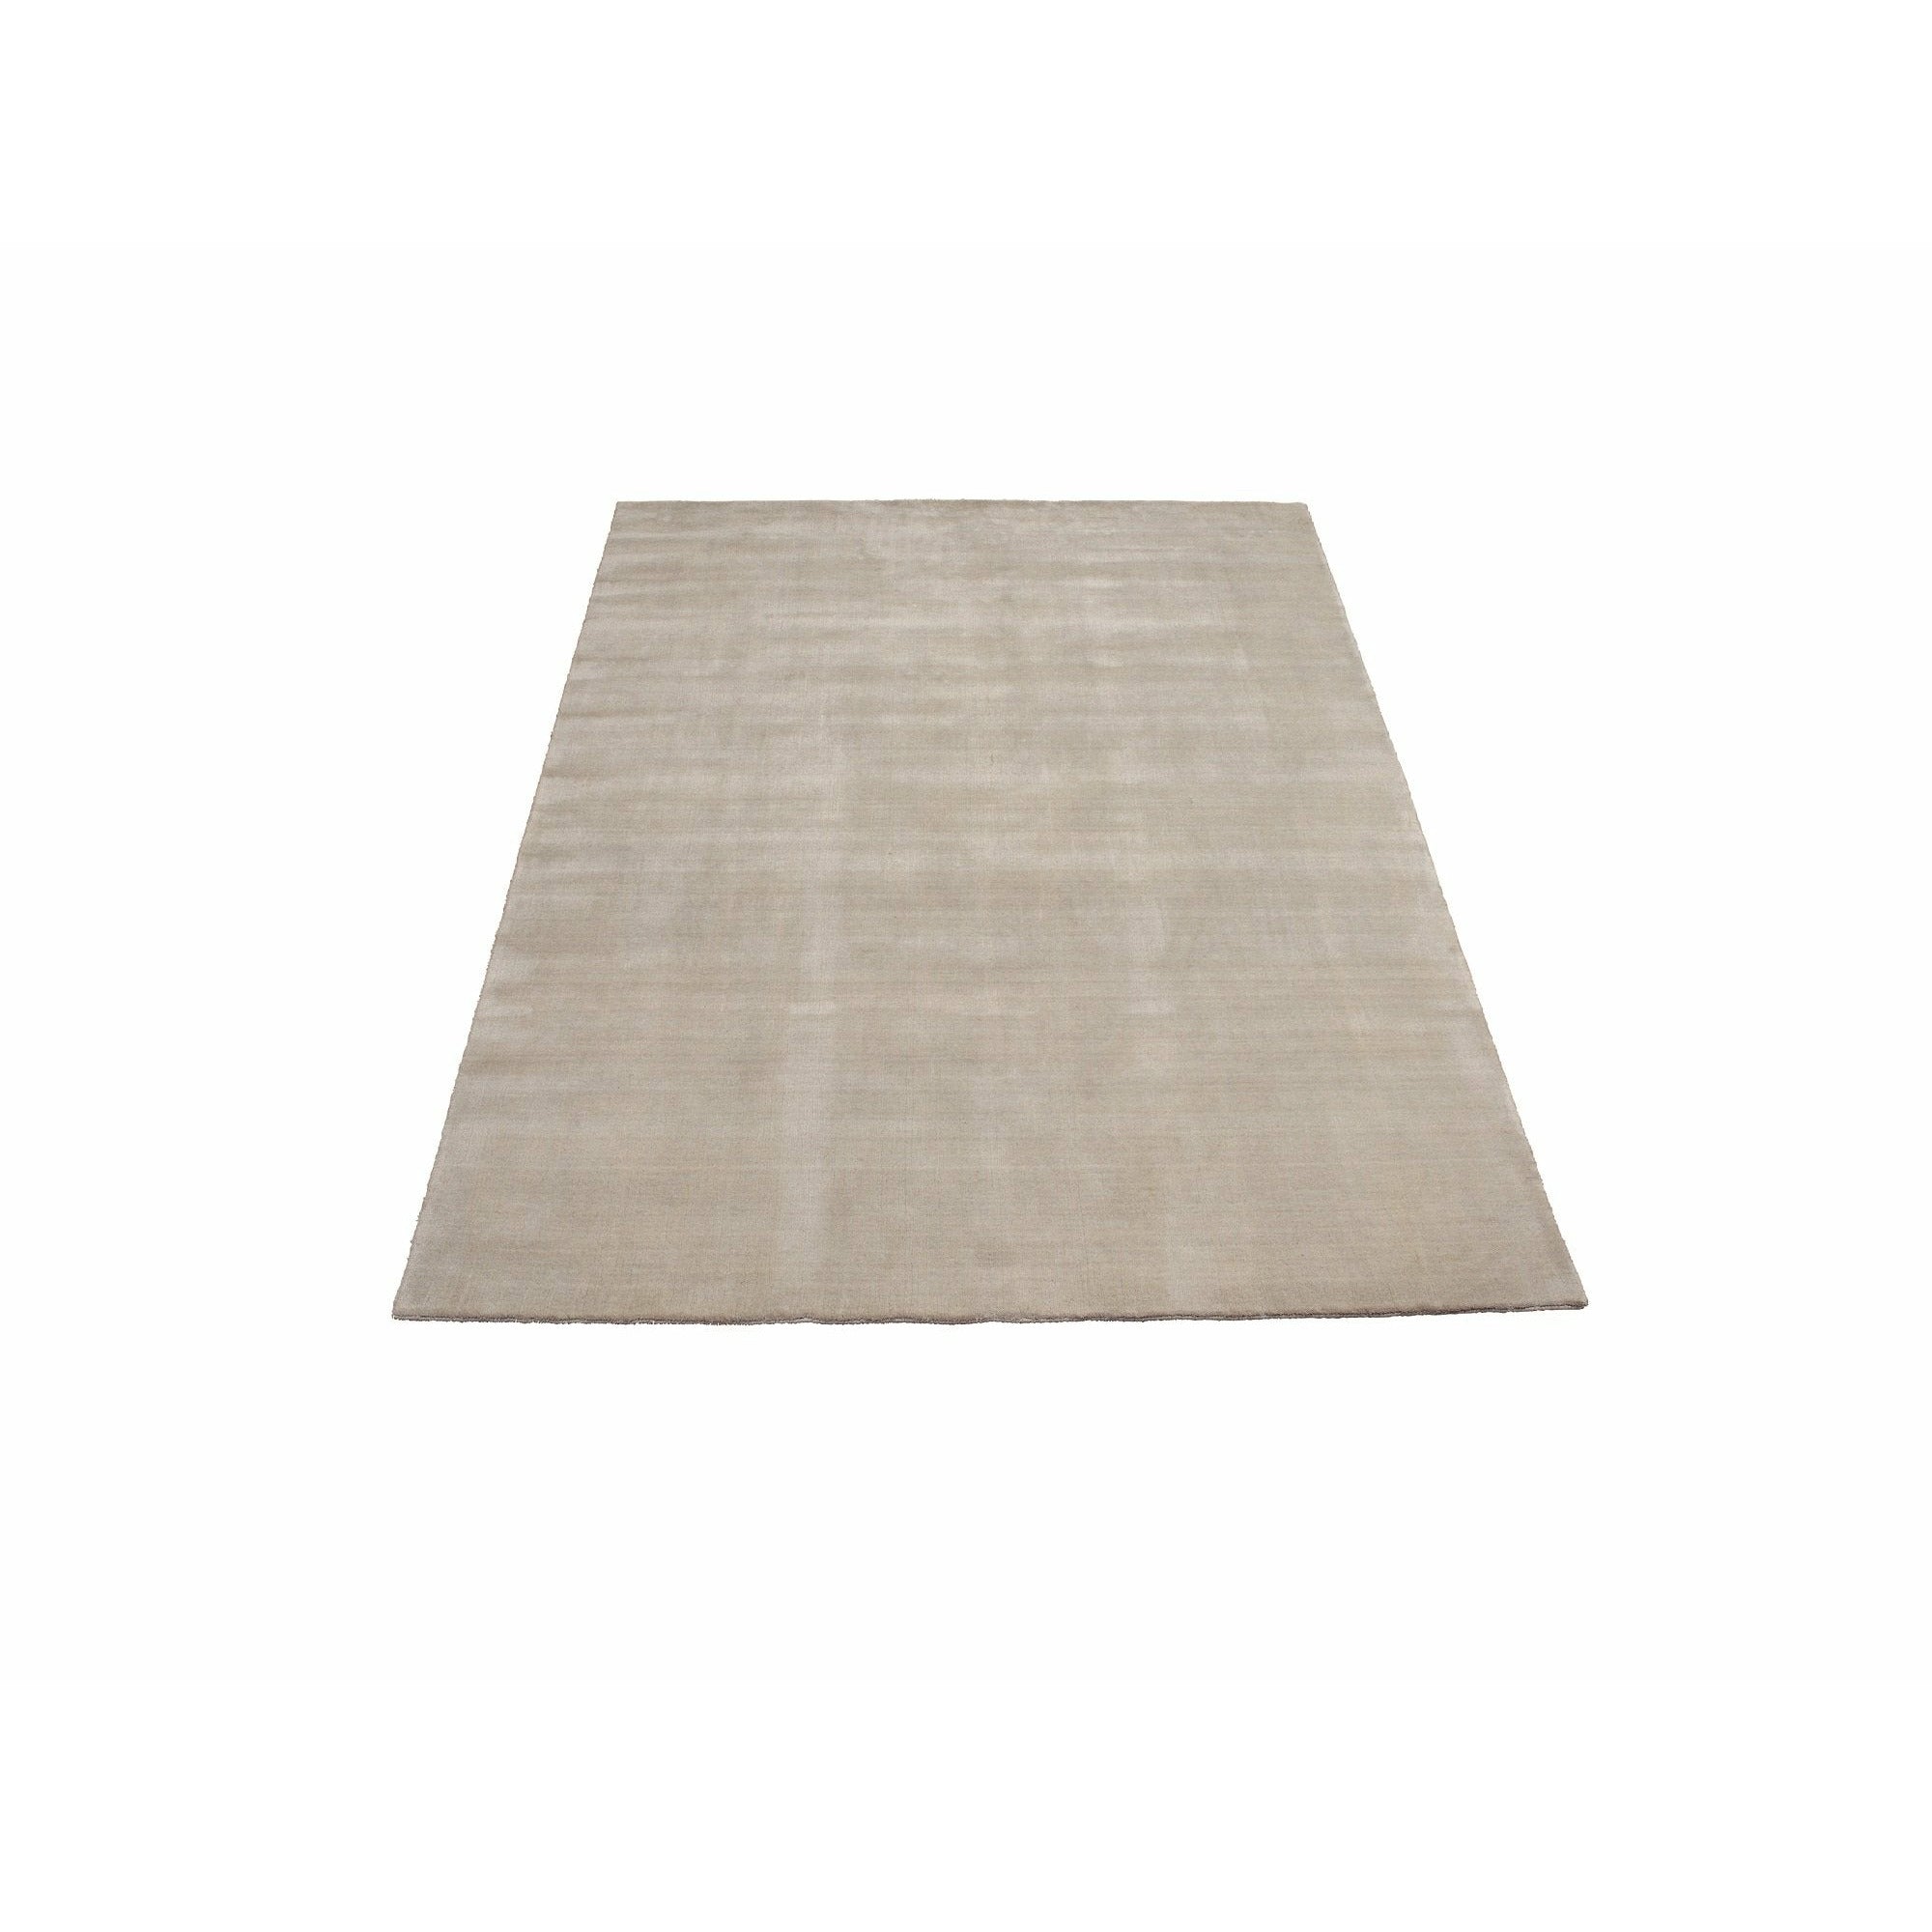 Massimo Earth Bamboo -matto pehmeä harmaa, 300x400 cm